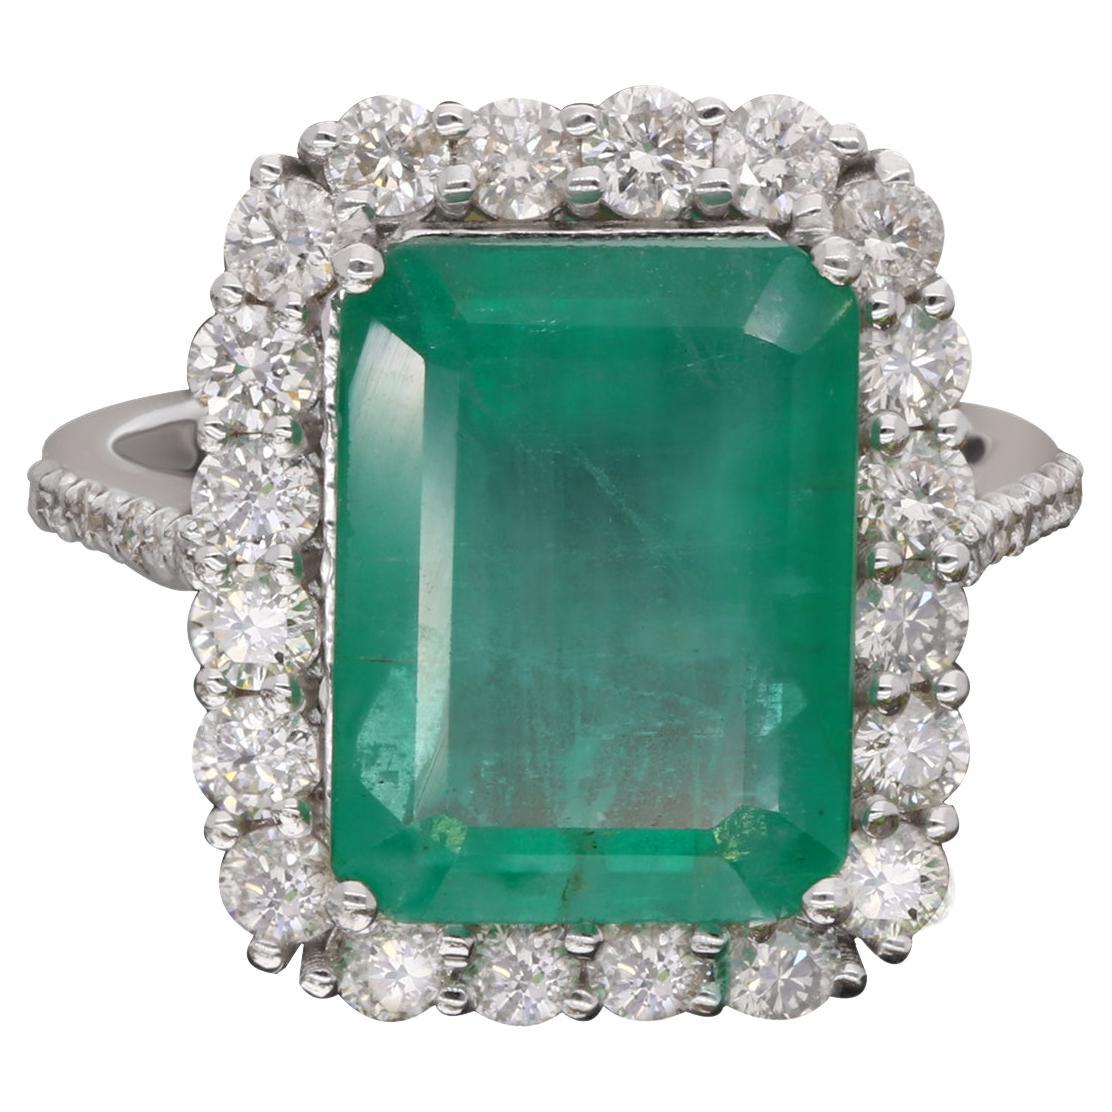 Real Zambian Emerald Gemstone Cocktail Ring Diamond 18 Karat White Gold Jewelry